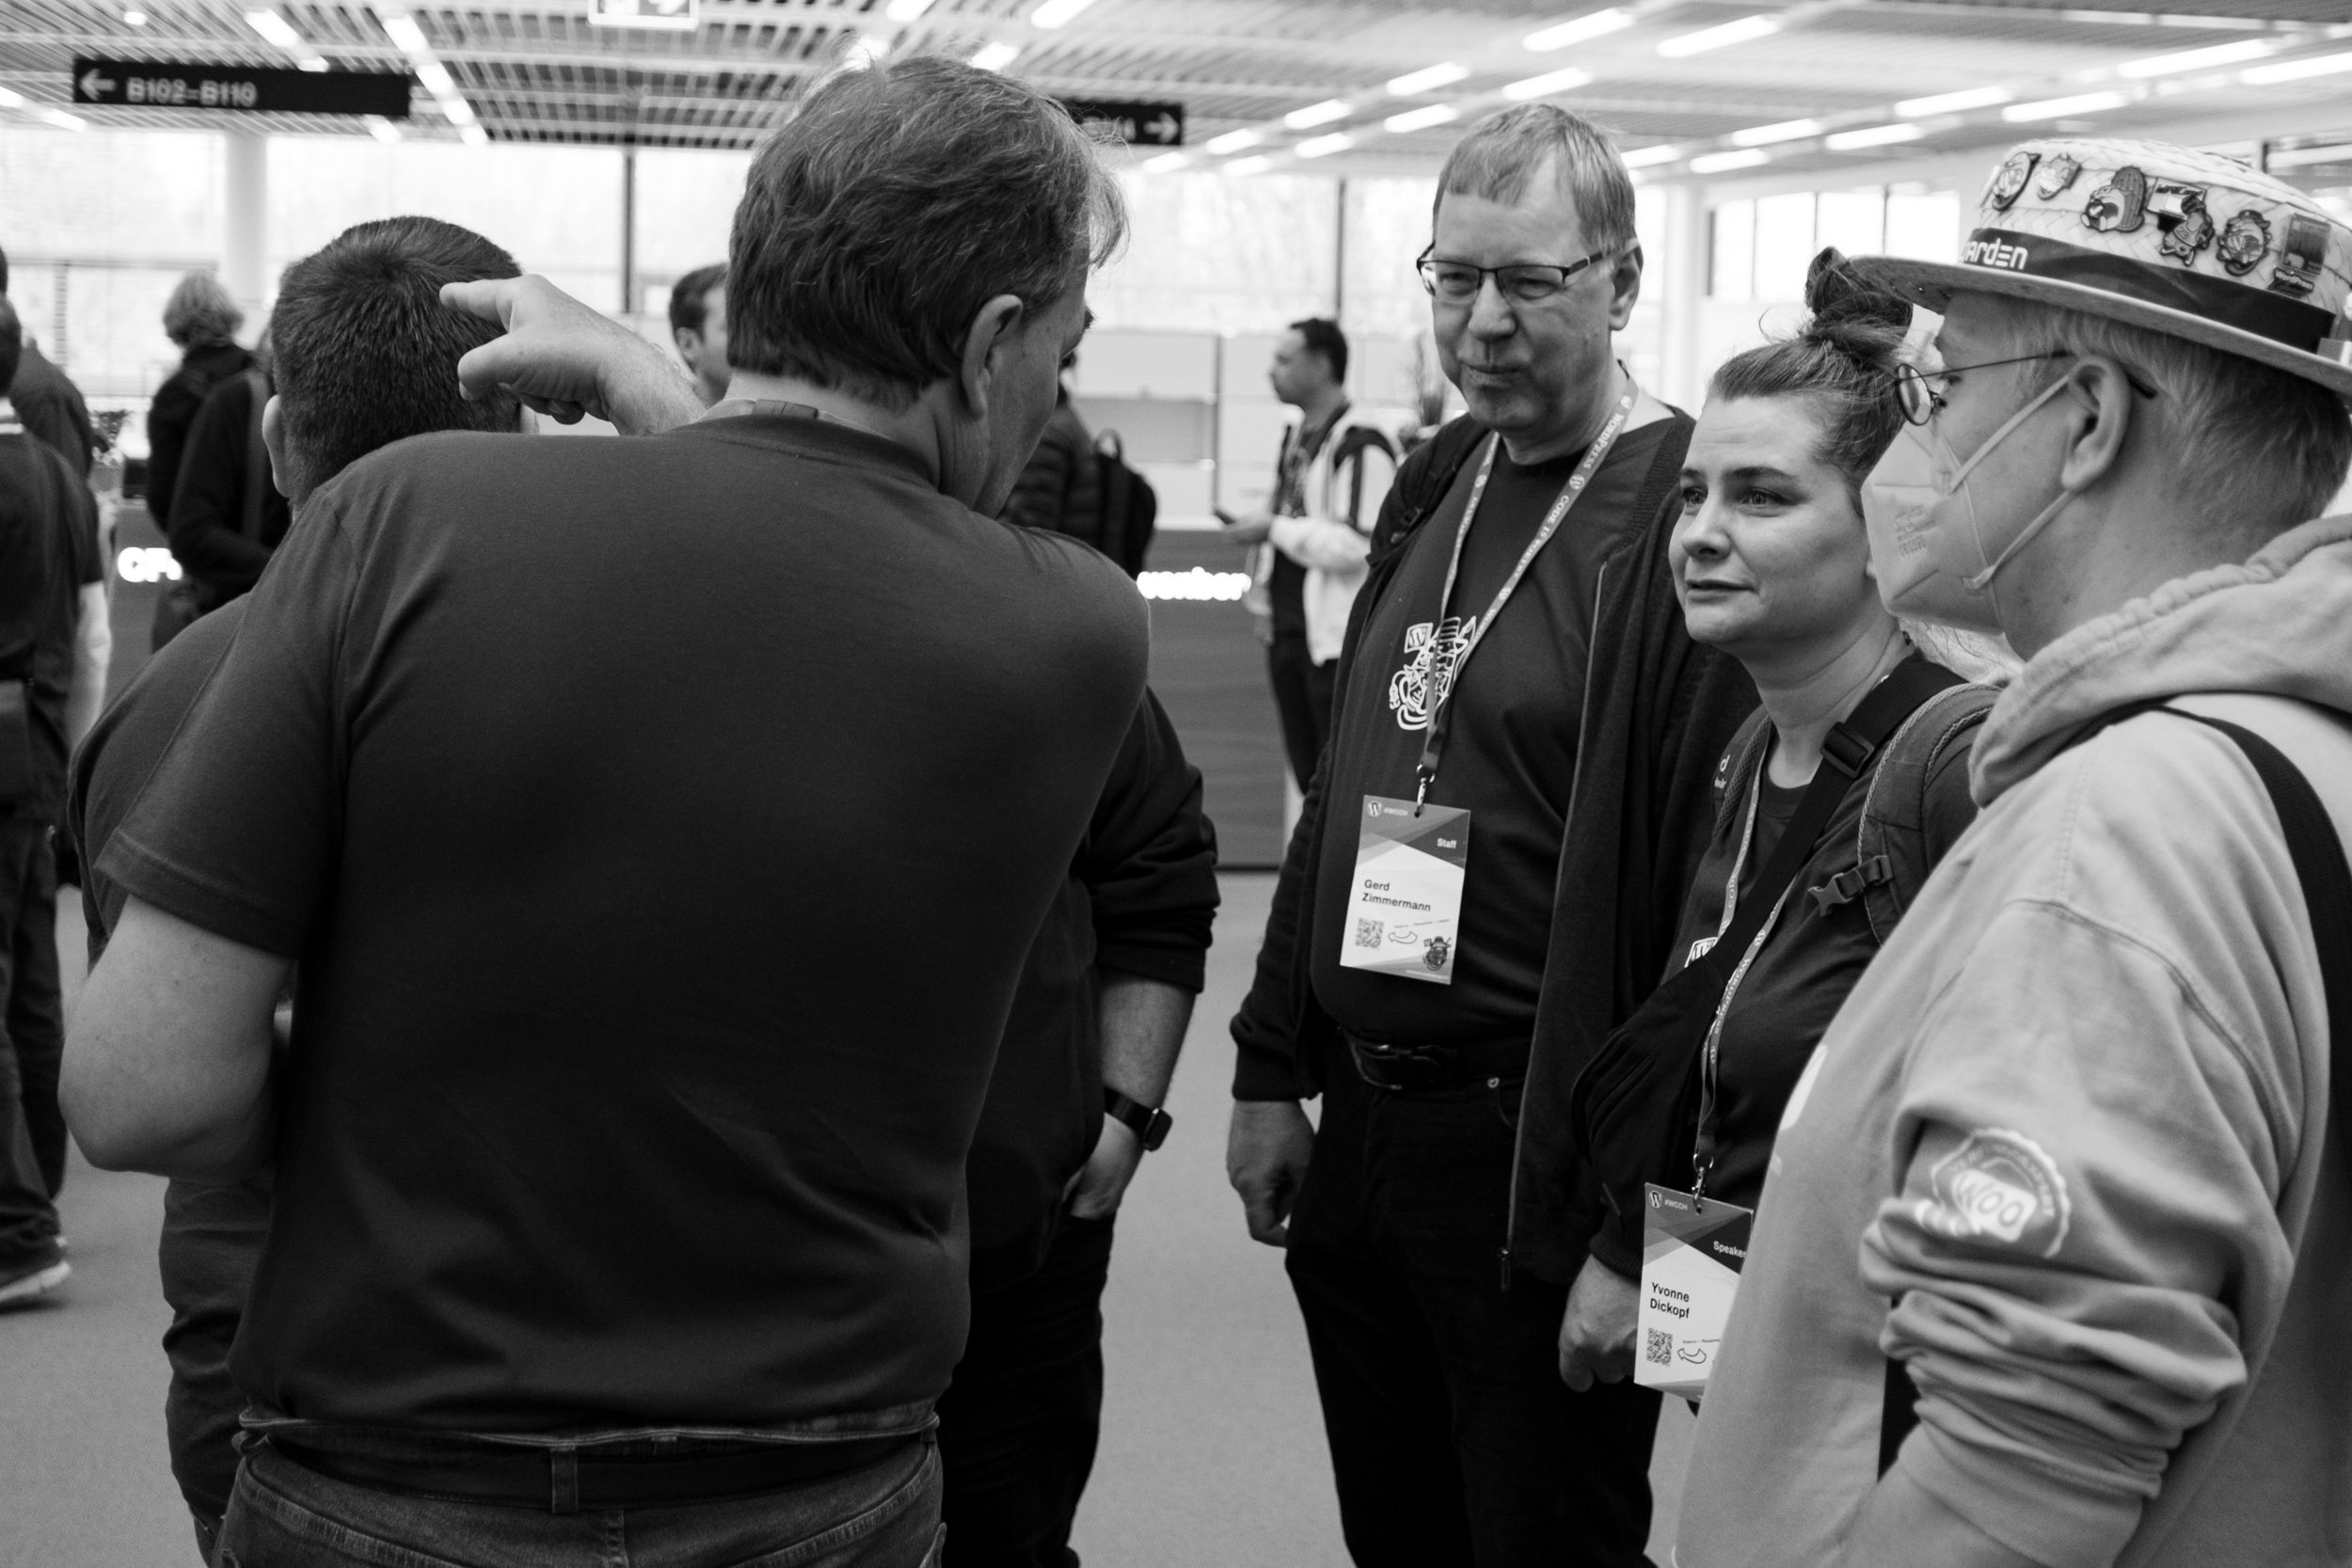 A few WordPress folks discussing in the hallway track.